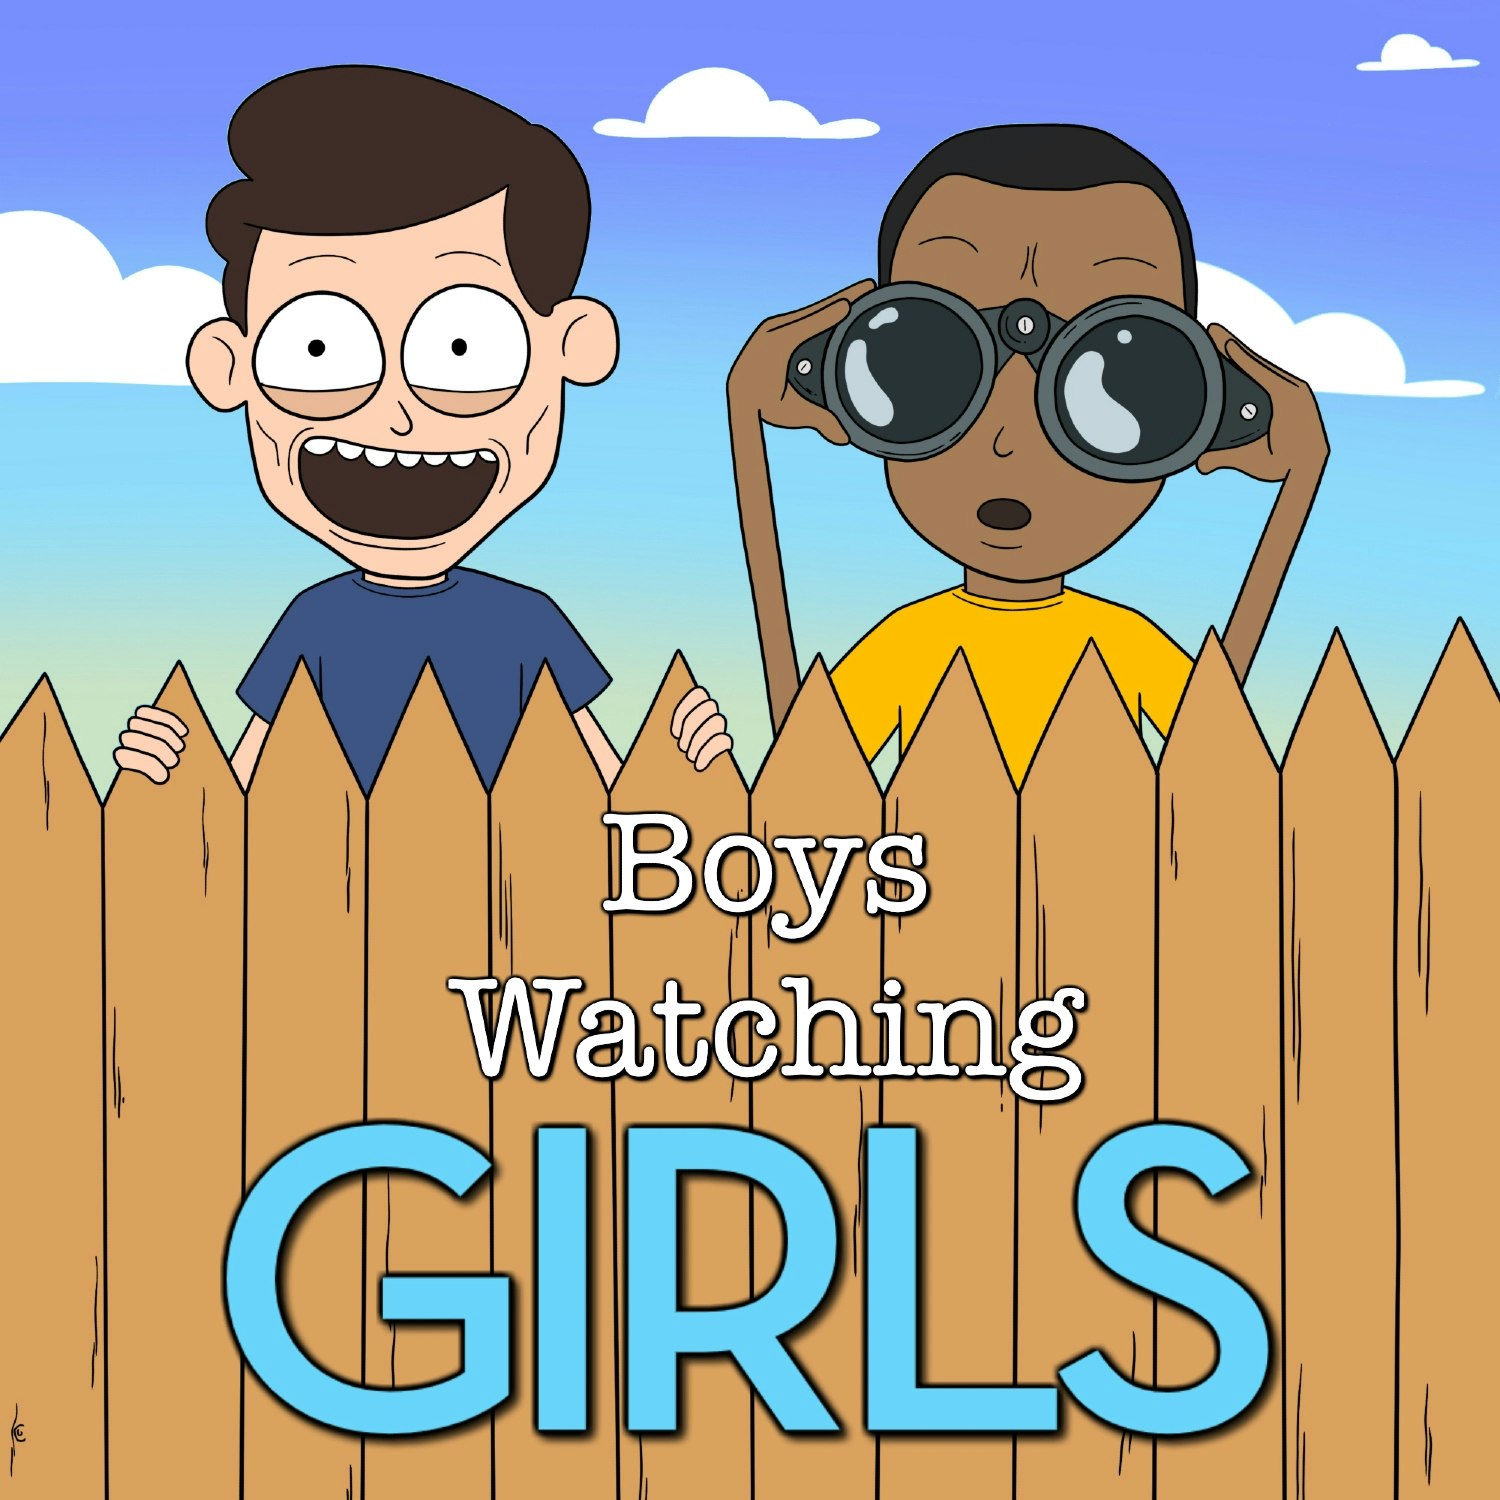 Boys Watching Girls